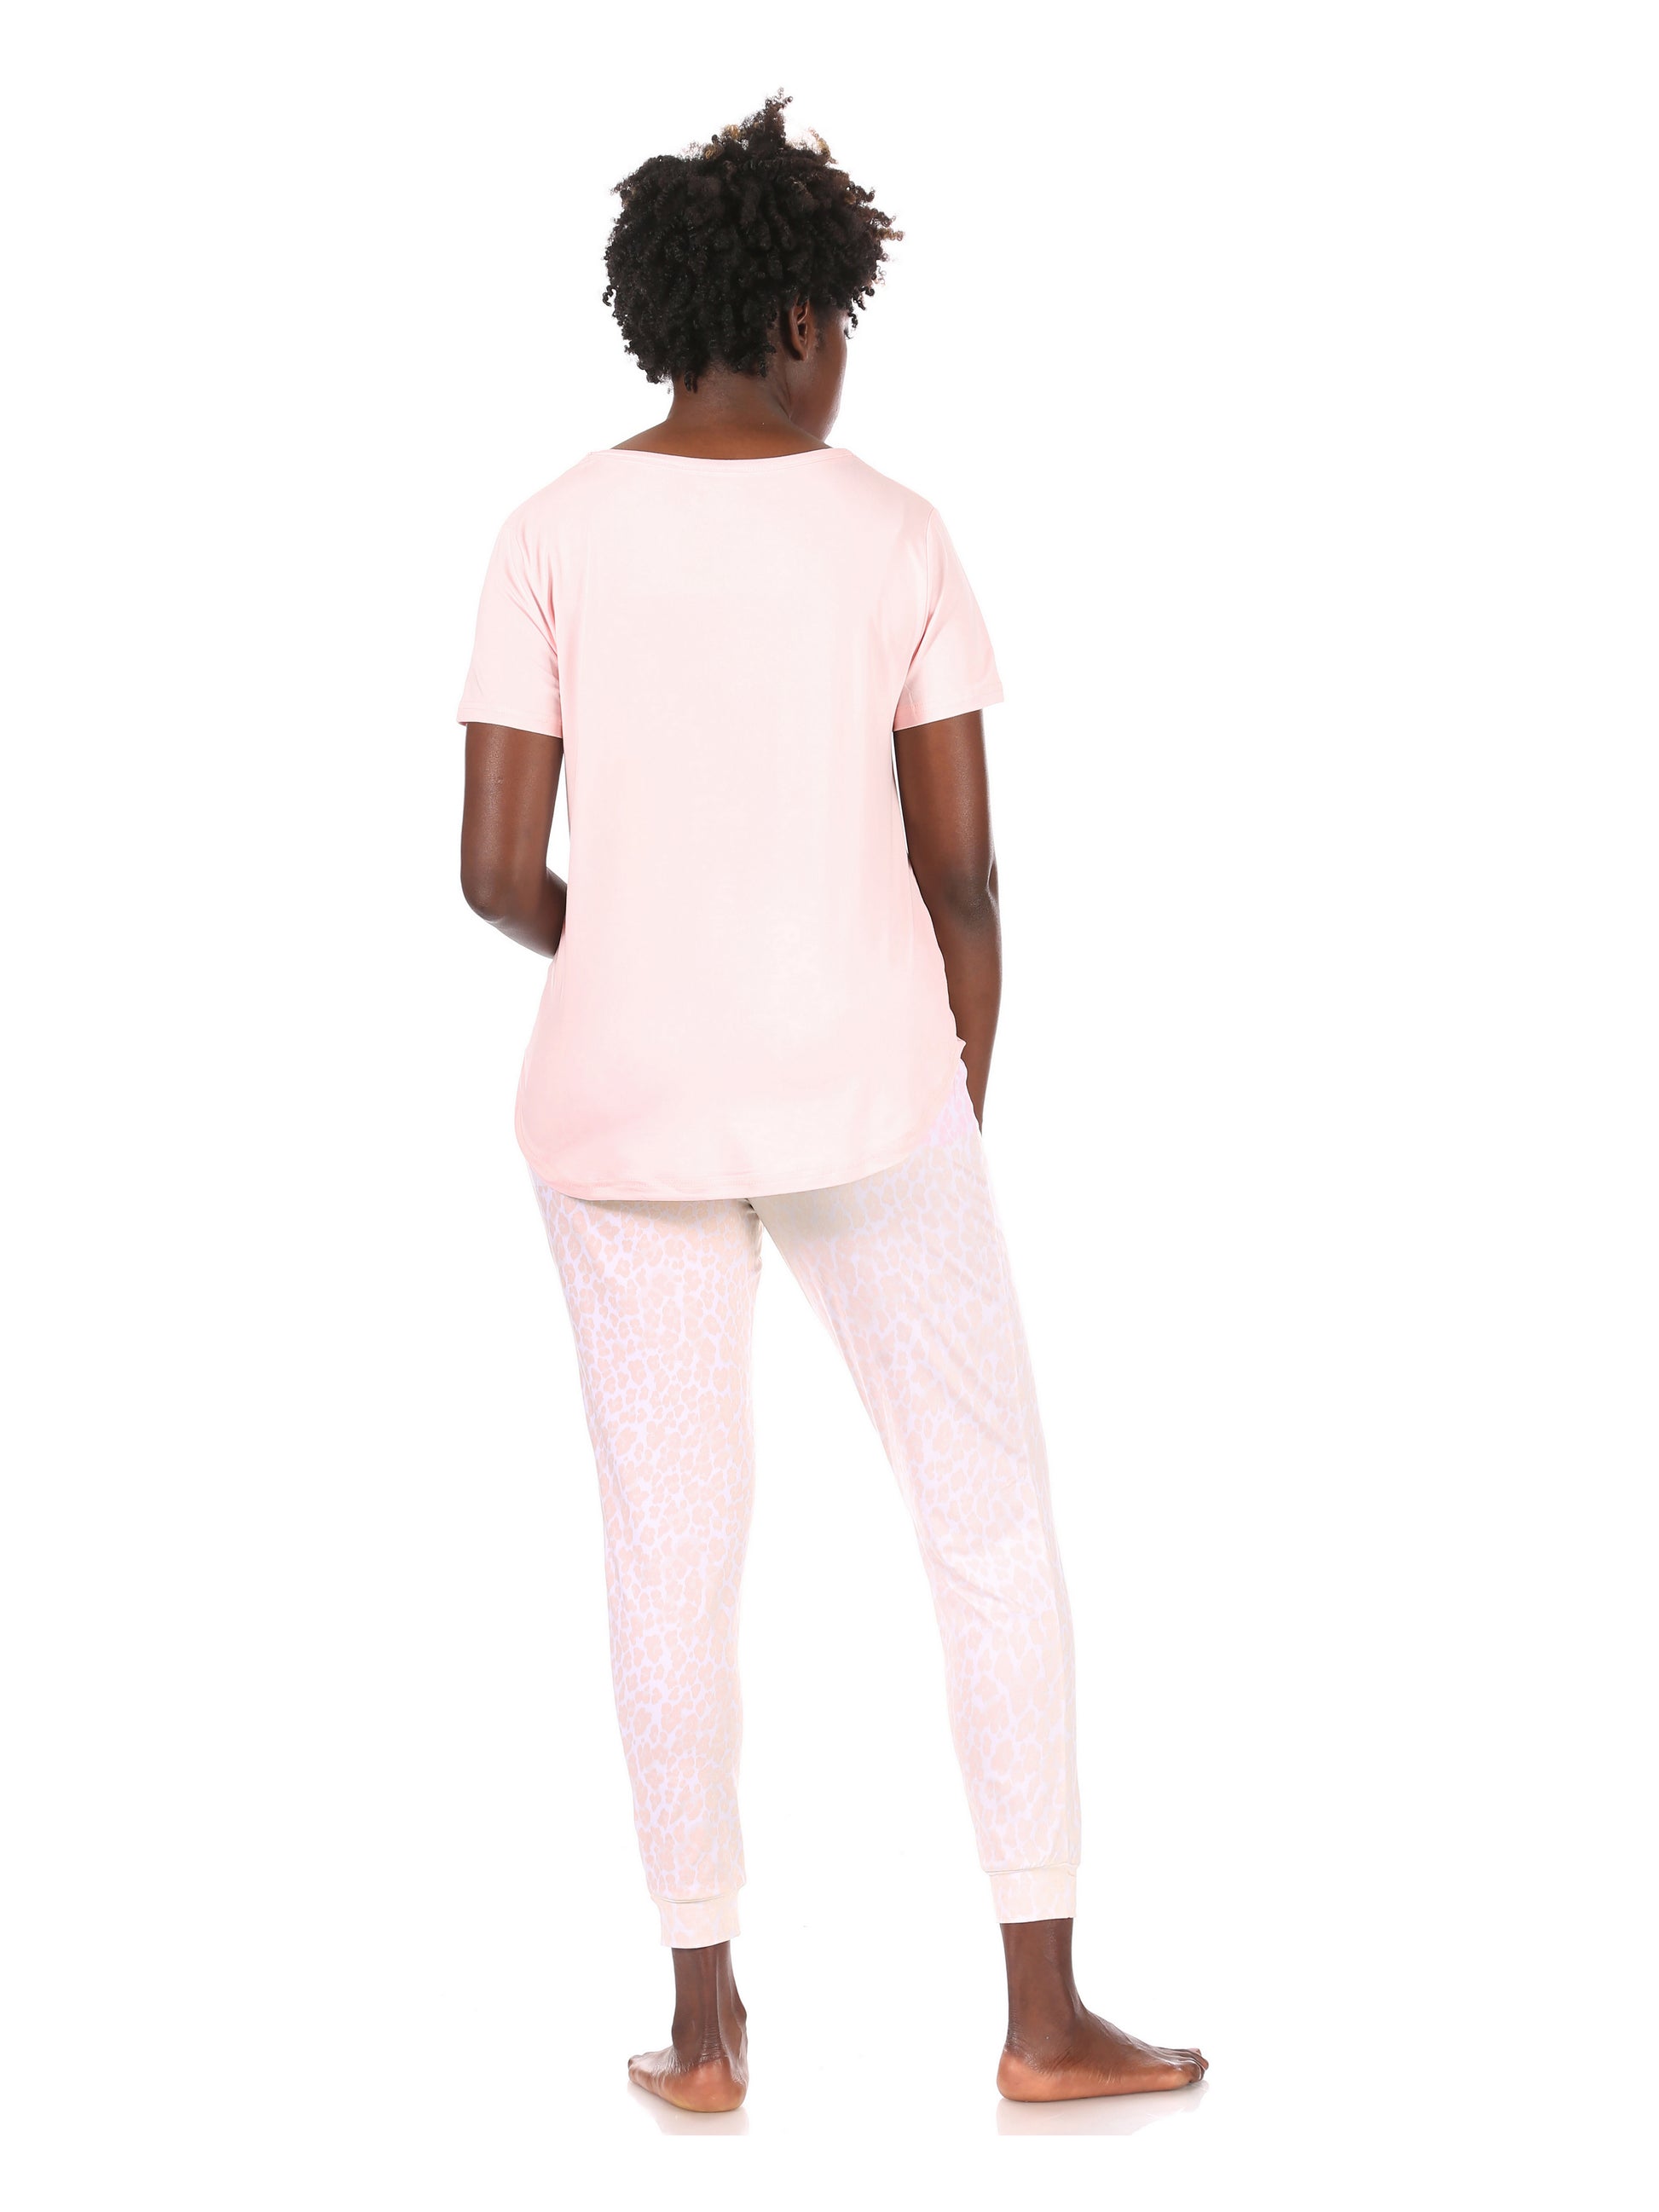 Women's "MOM LIFE" Short Sleeve Top and Drawstring Jogger Pajama Set - Rae Dunn Wear - W Pants Set